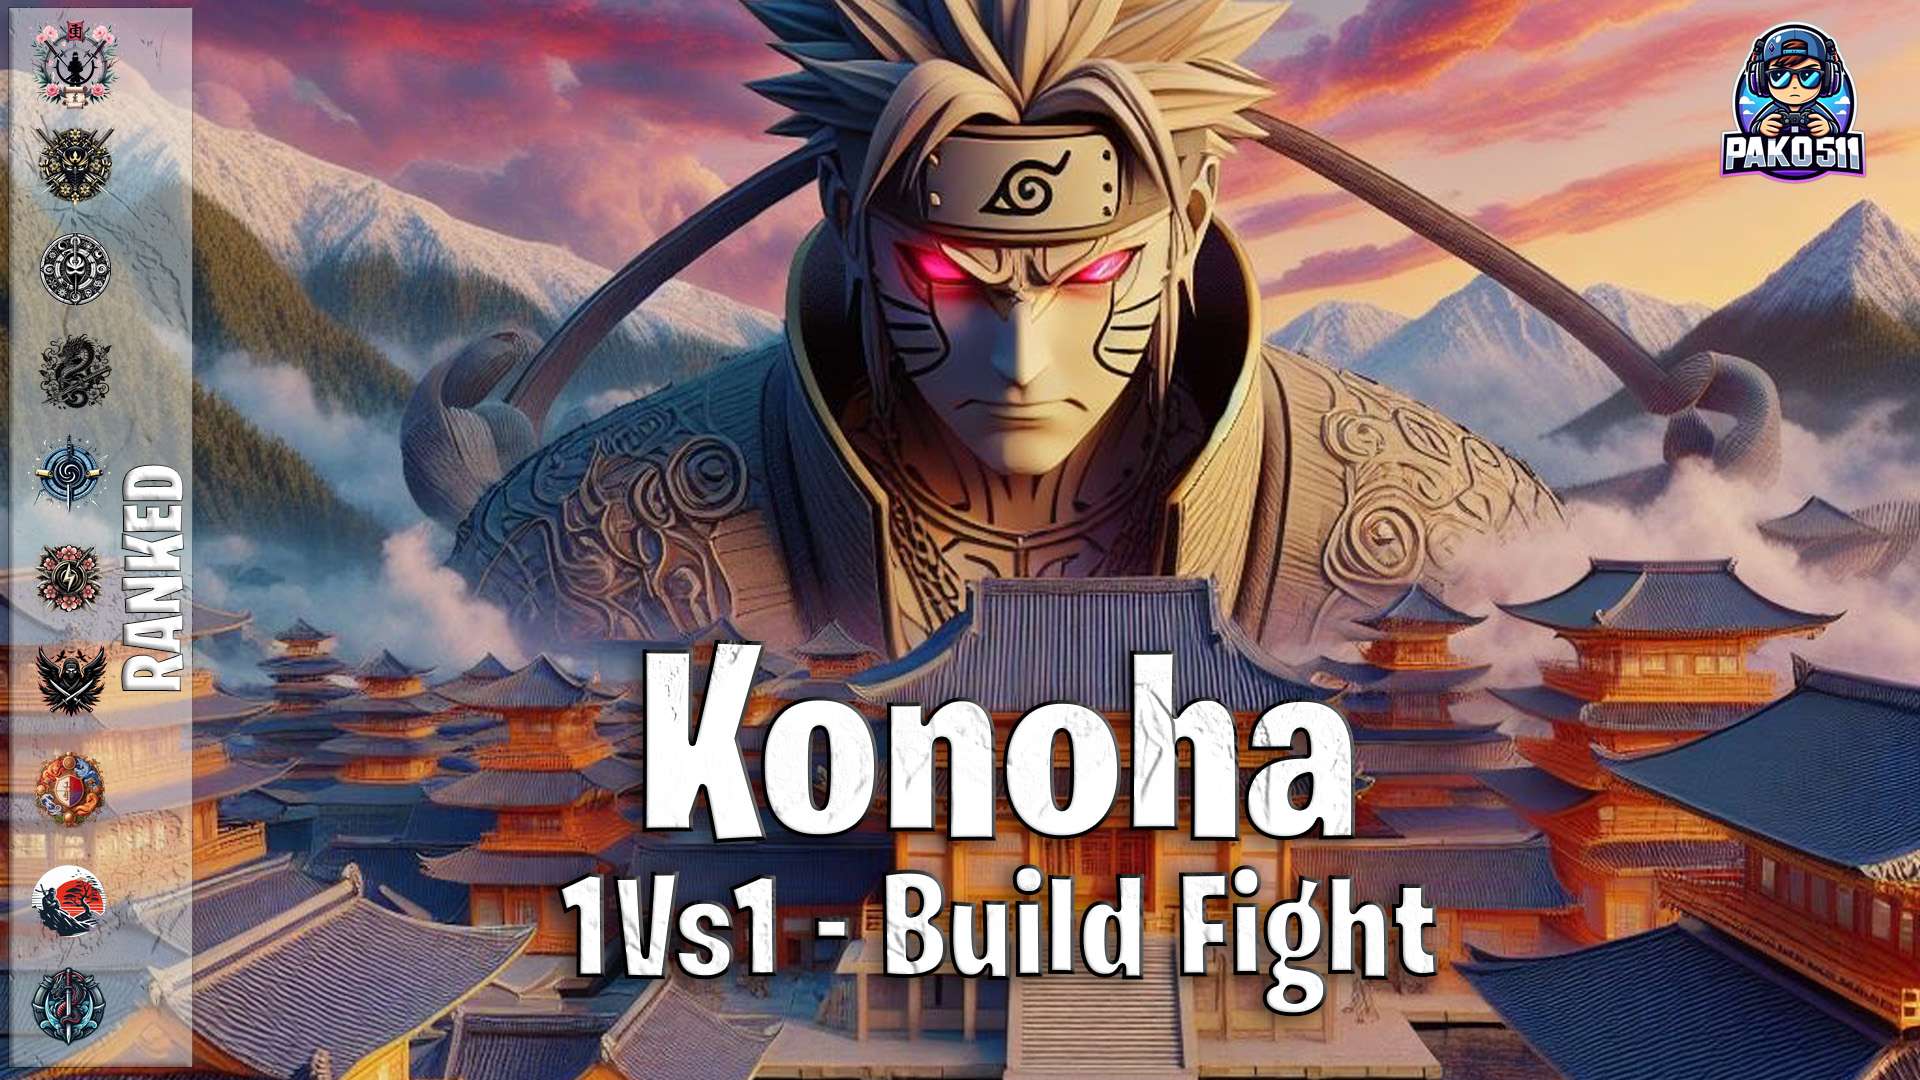 Konoha 1Vs1 - Build Fight